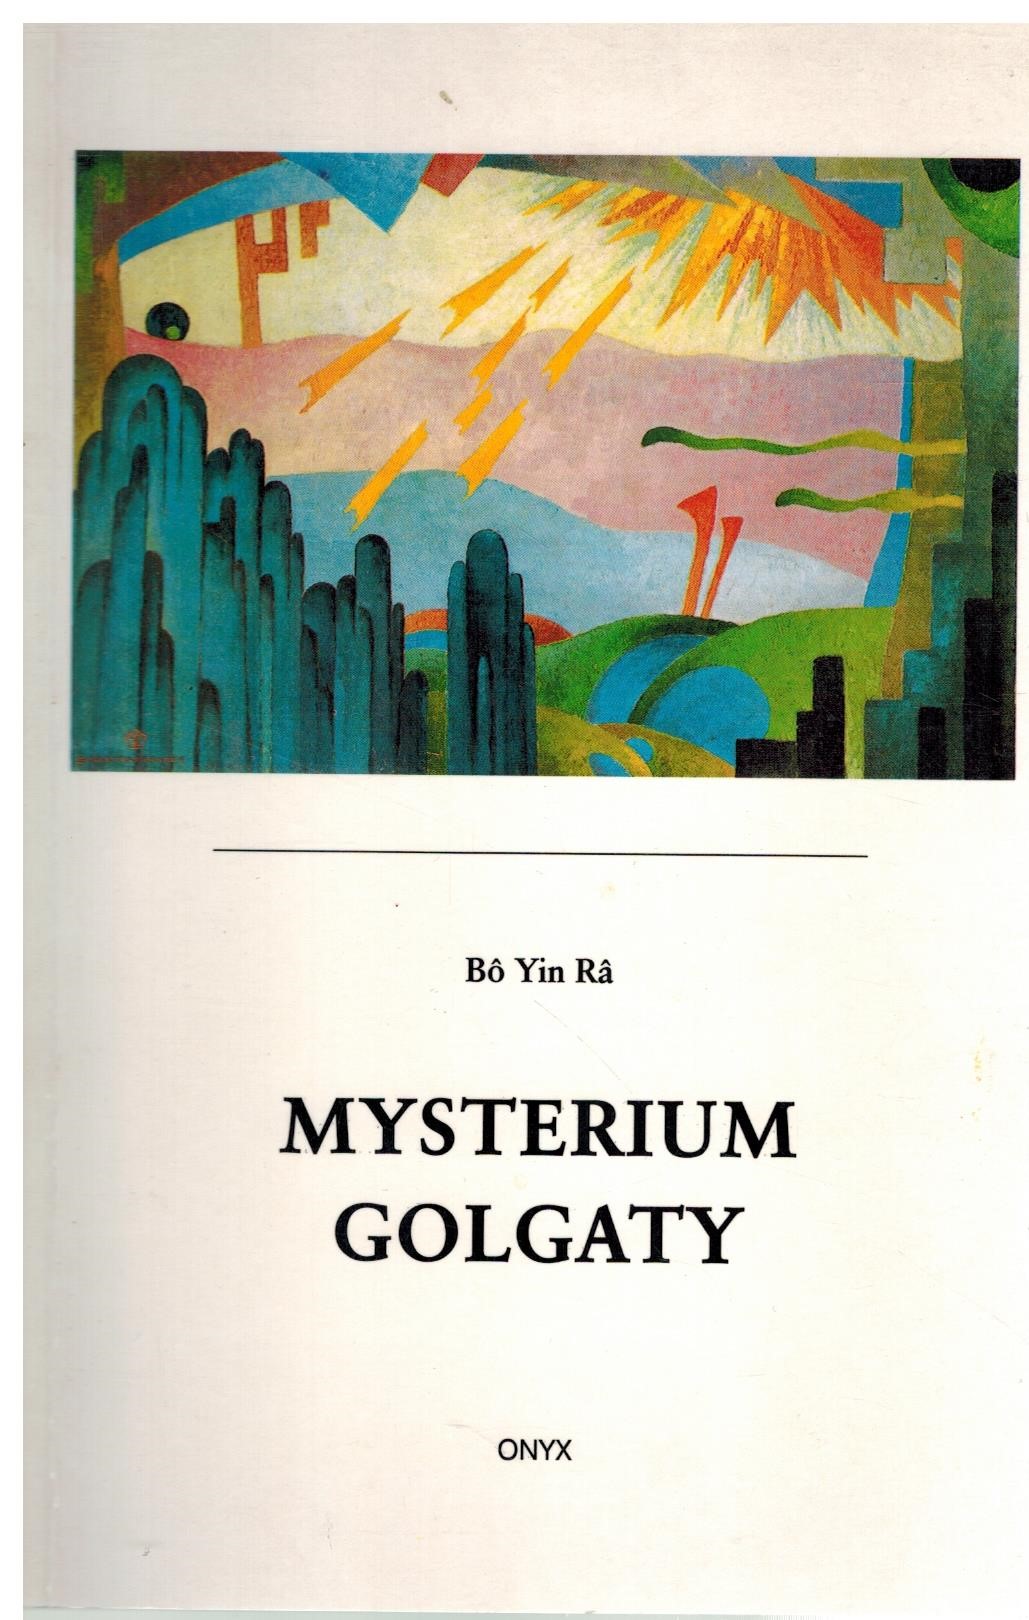 MYSTERIUM GOLGATY